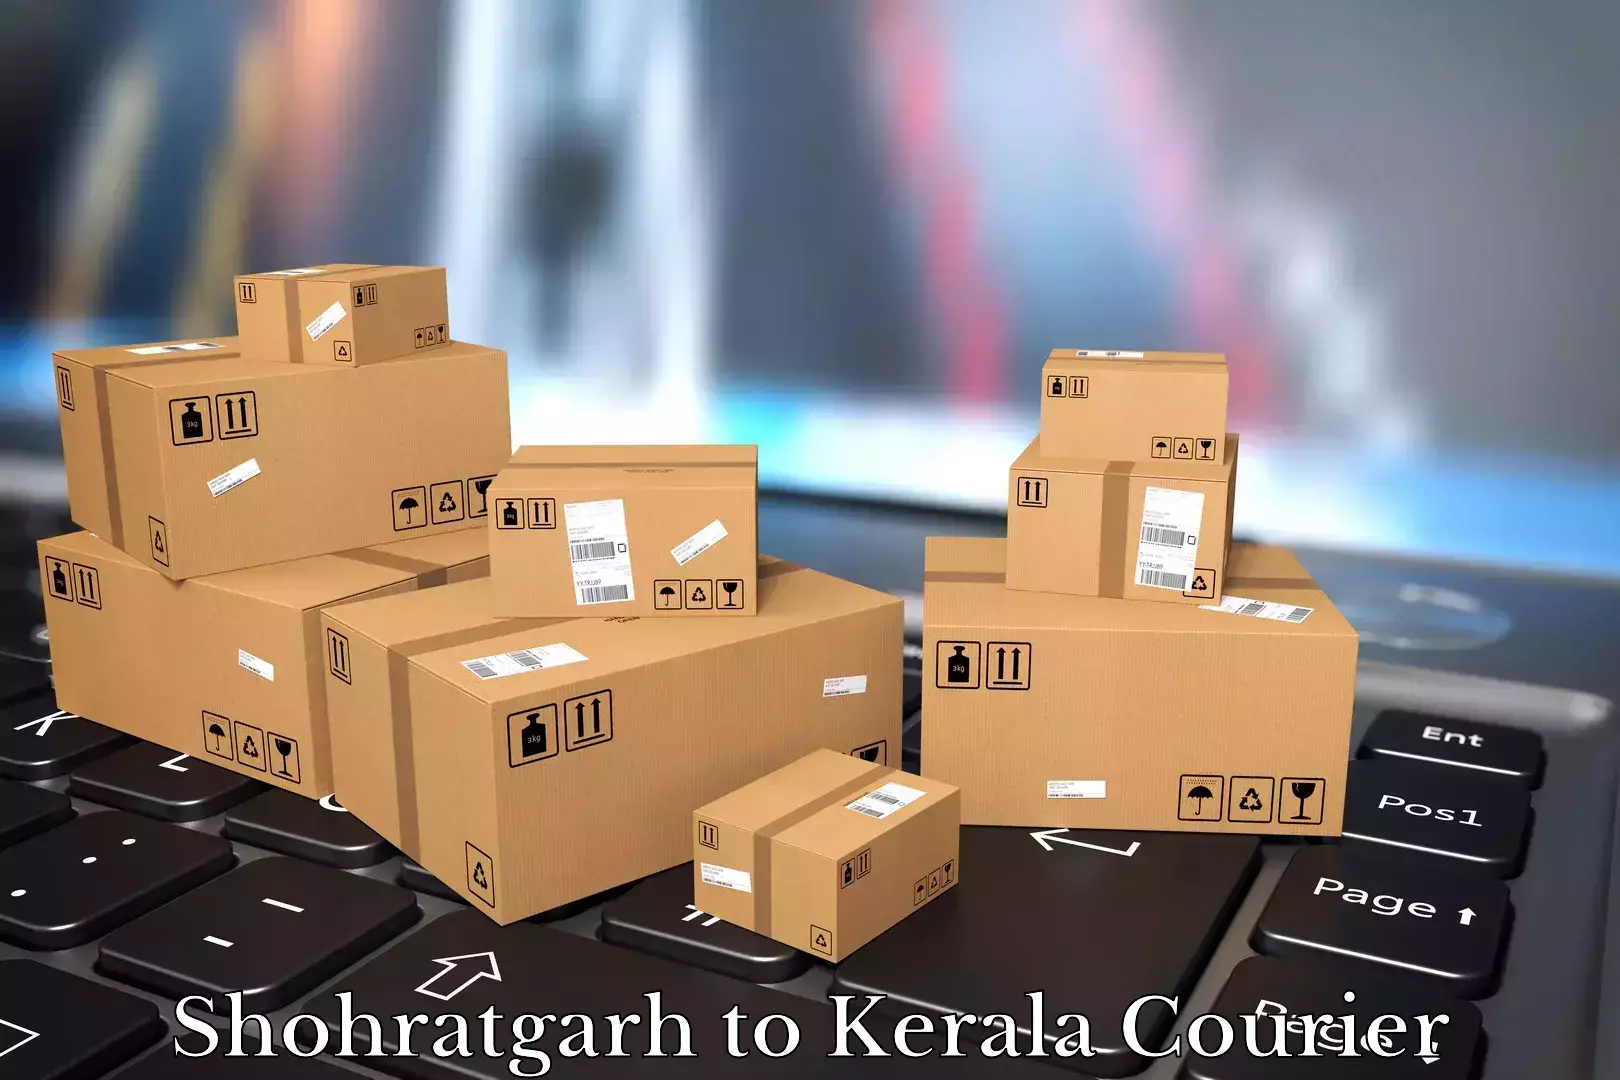 Furniture moving experts Shohratgarh to Trivandrum